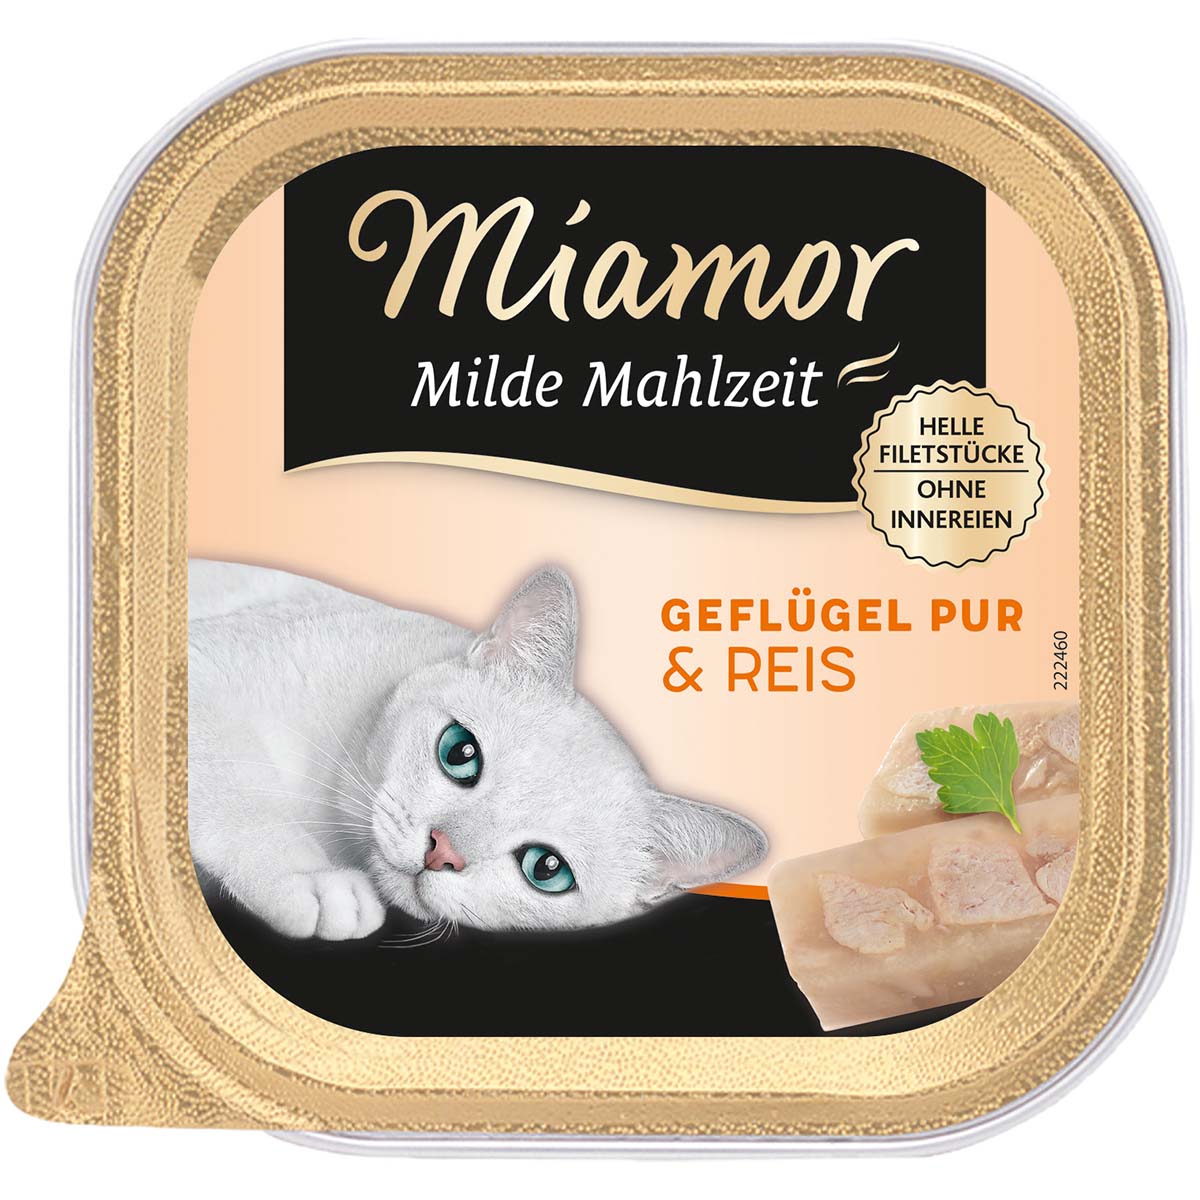 Miamor Milde Mahlzeit Geflügel Pur & Reis 16x100g